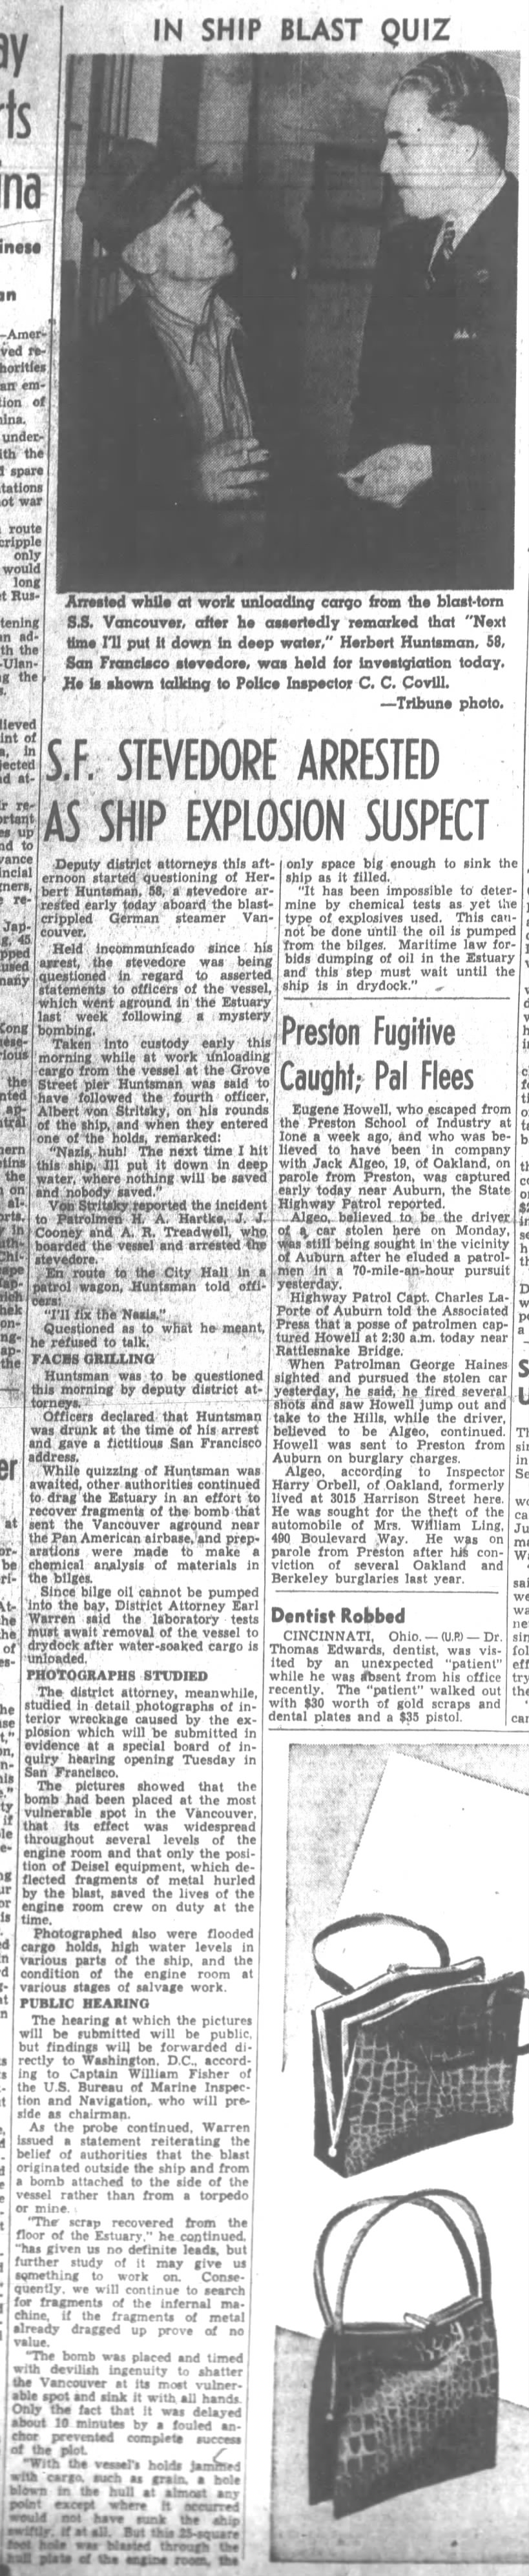 SS Vancouver - Herbert Huntsman arrested